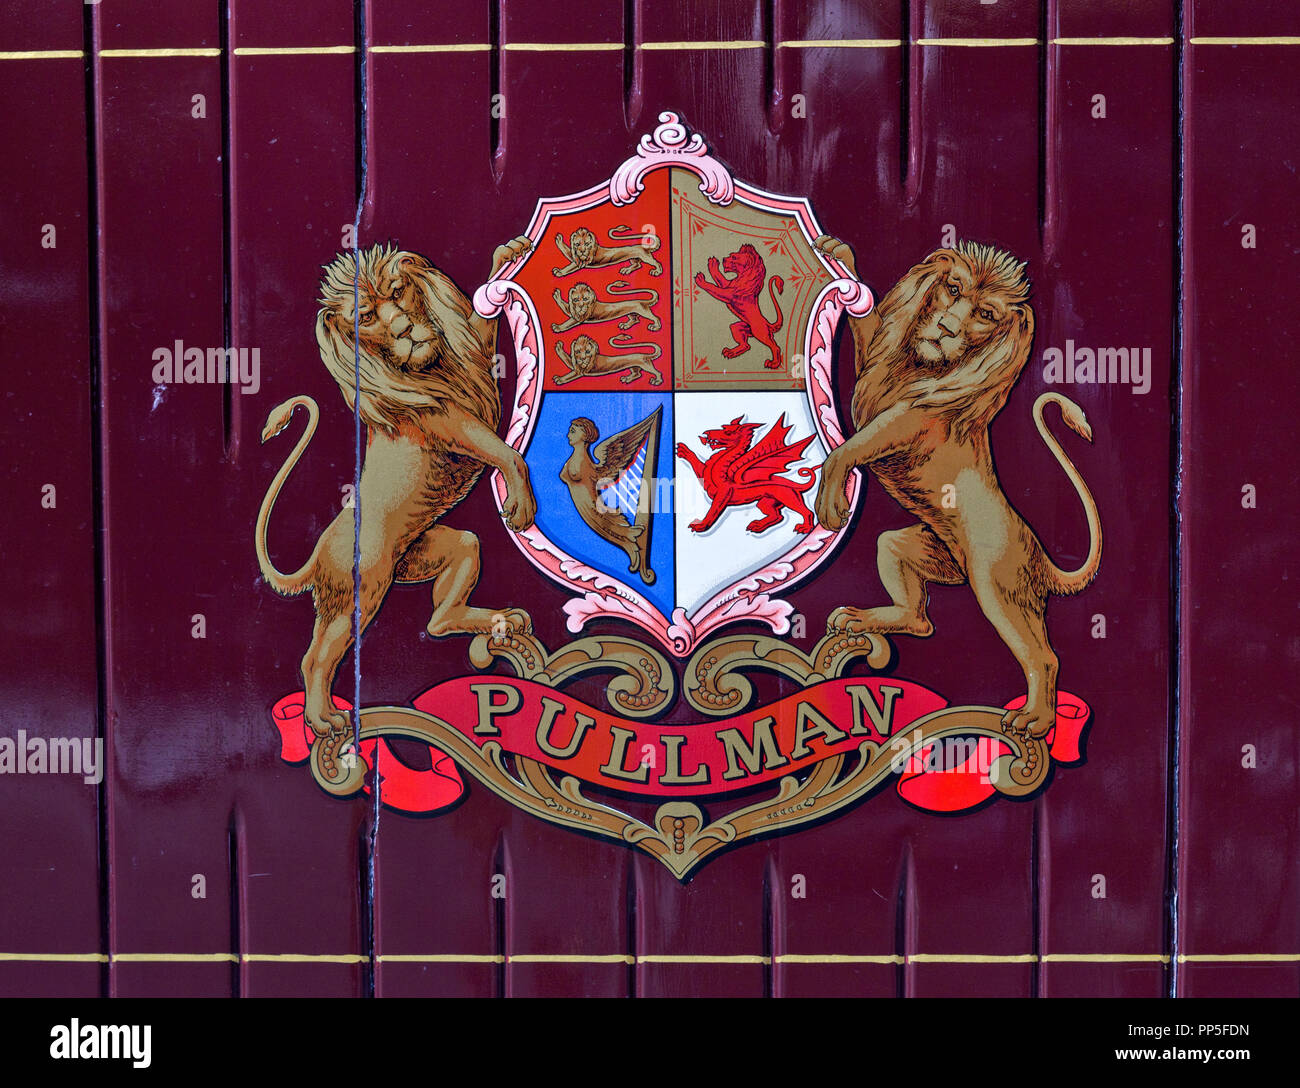 Pullman Railway Coach coat of arms Stock Photo